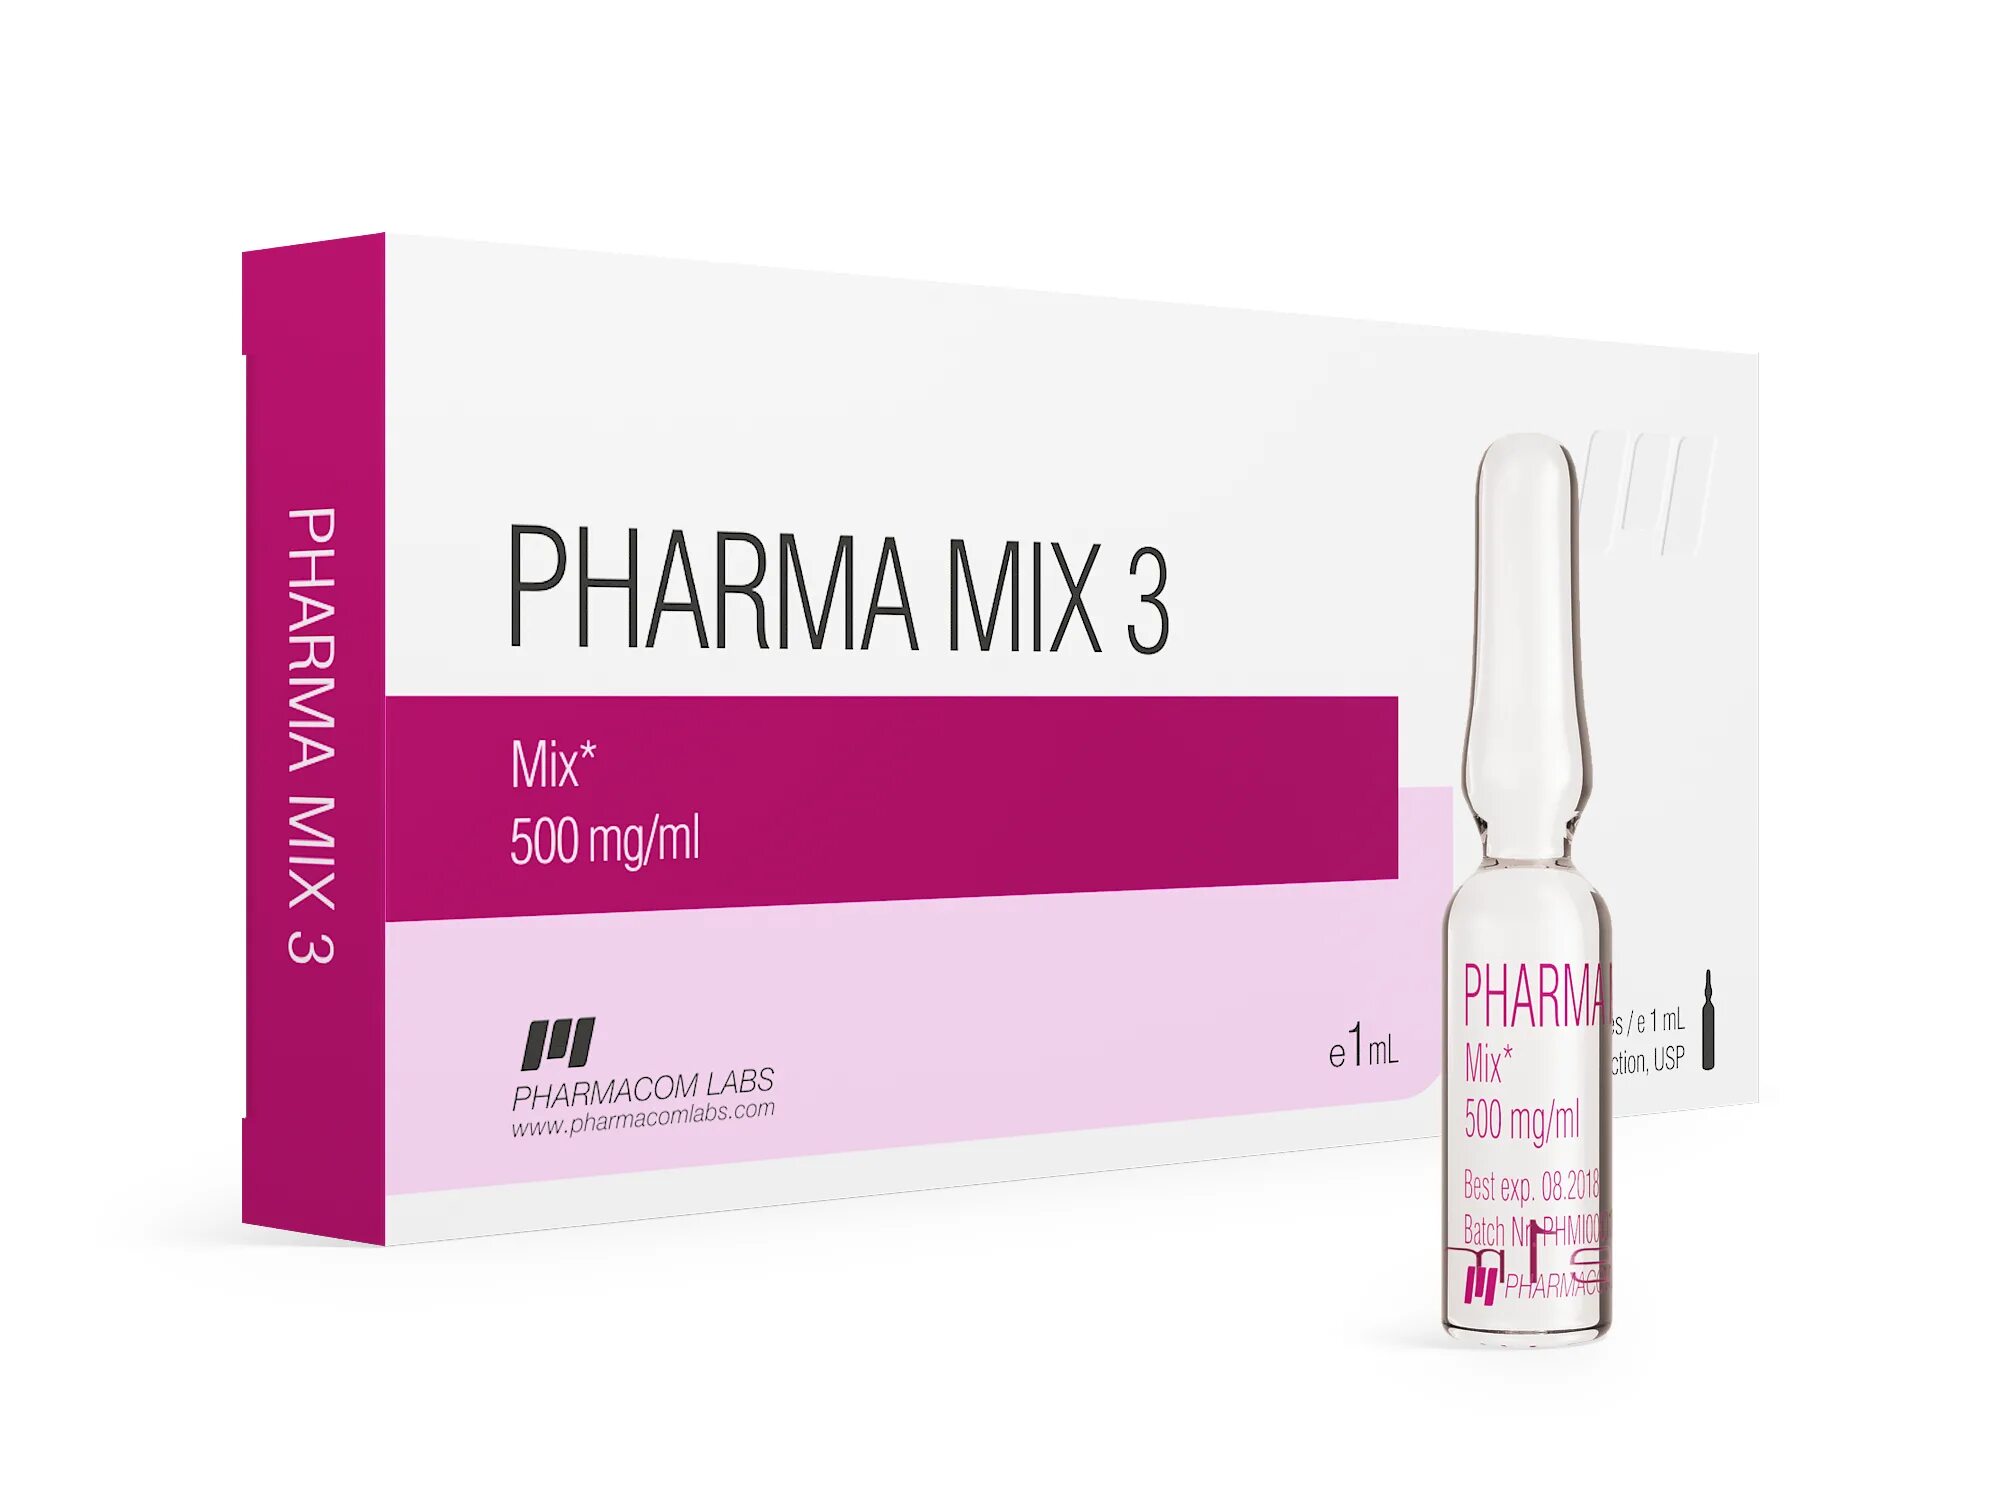 Pharma mix 3. Pharma Mix 4 ампулы. Pharma oxy 50 мг/мл. Микс 3 Фармаком. Фарма Dro p100.